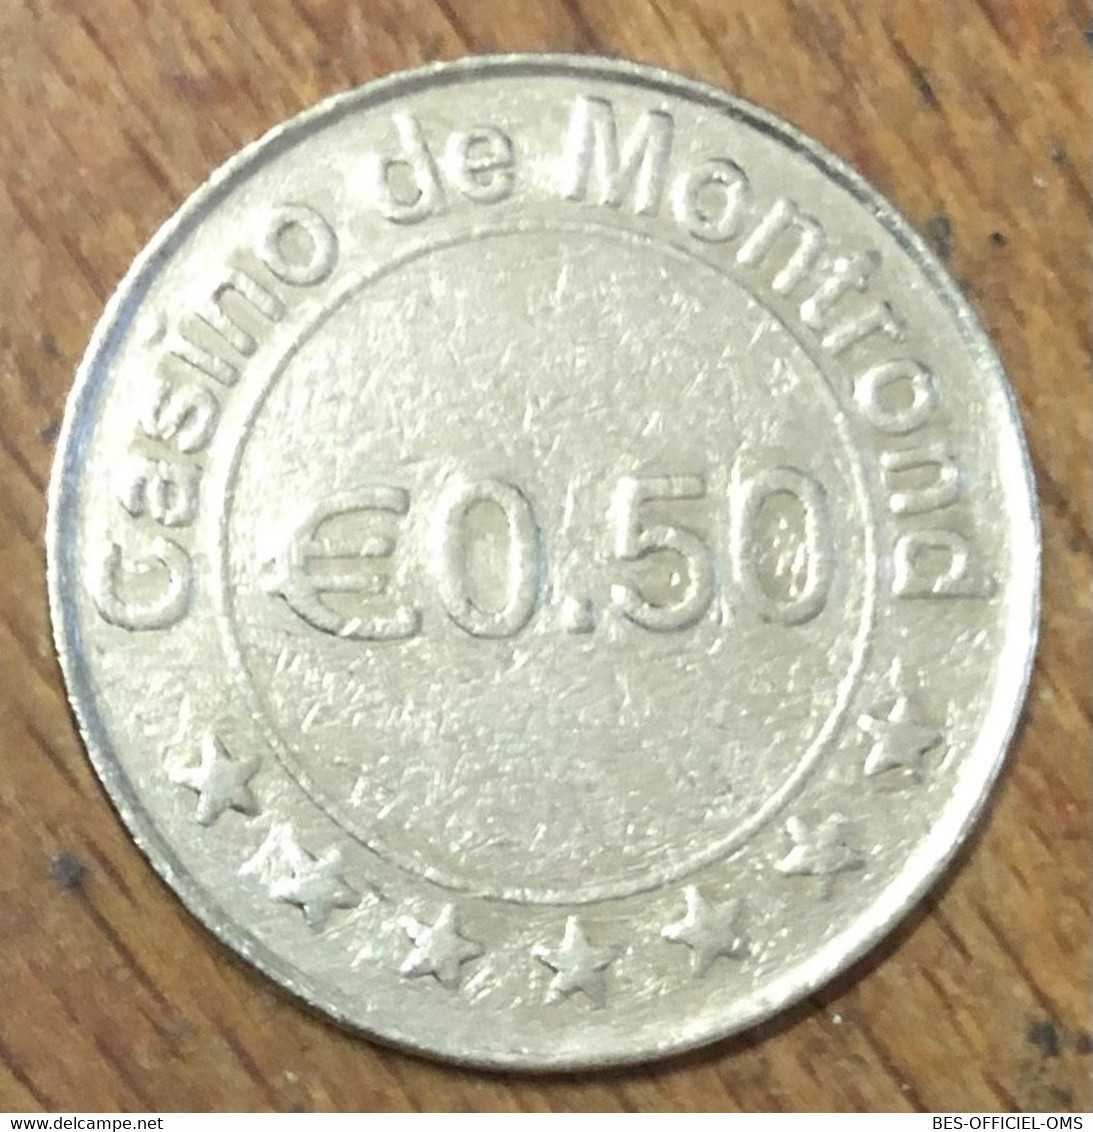 42 CASINO DE MONTROND-LES-BAINS JETON DE 0,50 EURO SLOT MACHINE CHIPS TOKENS COINS GAMING - Casino